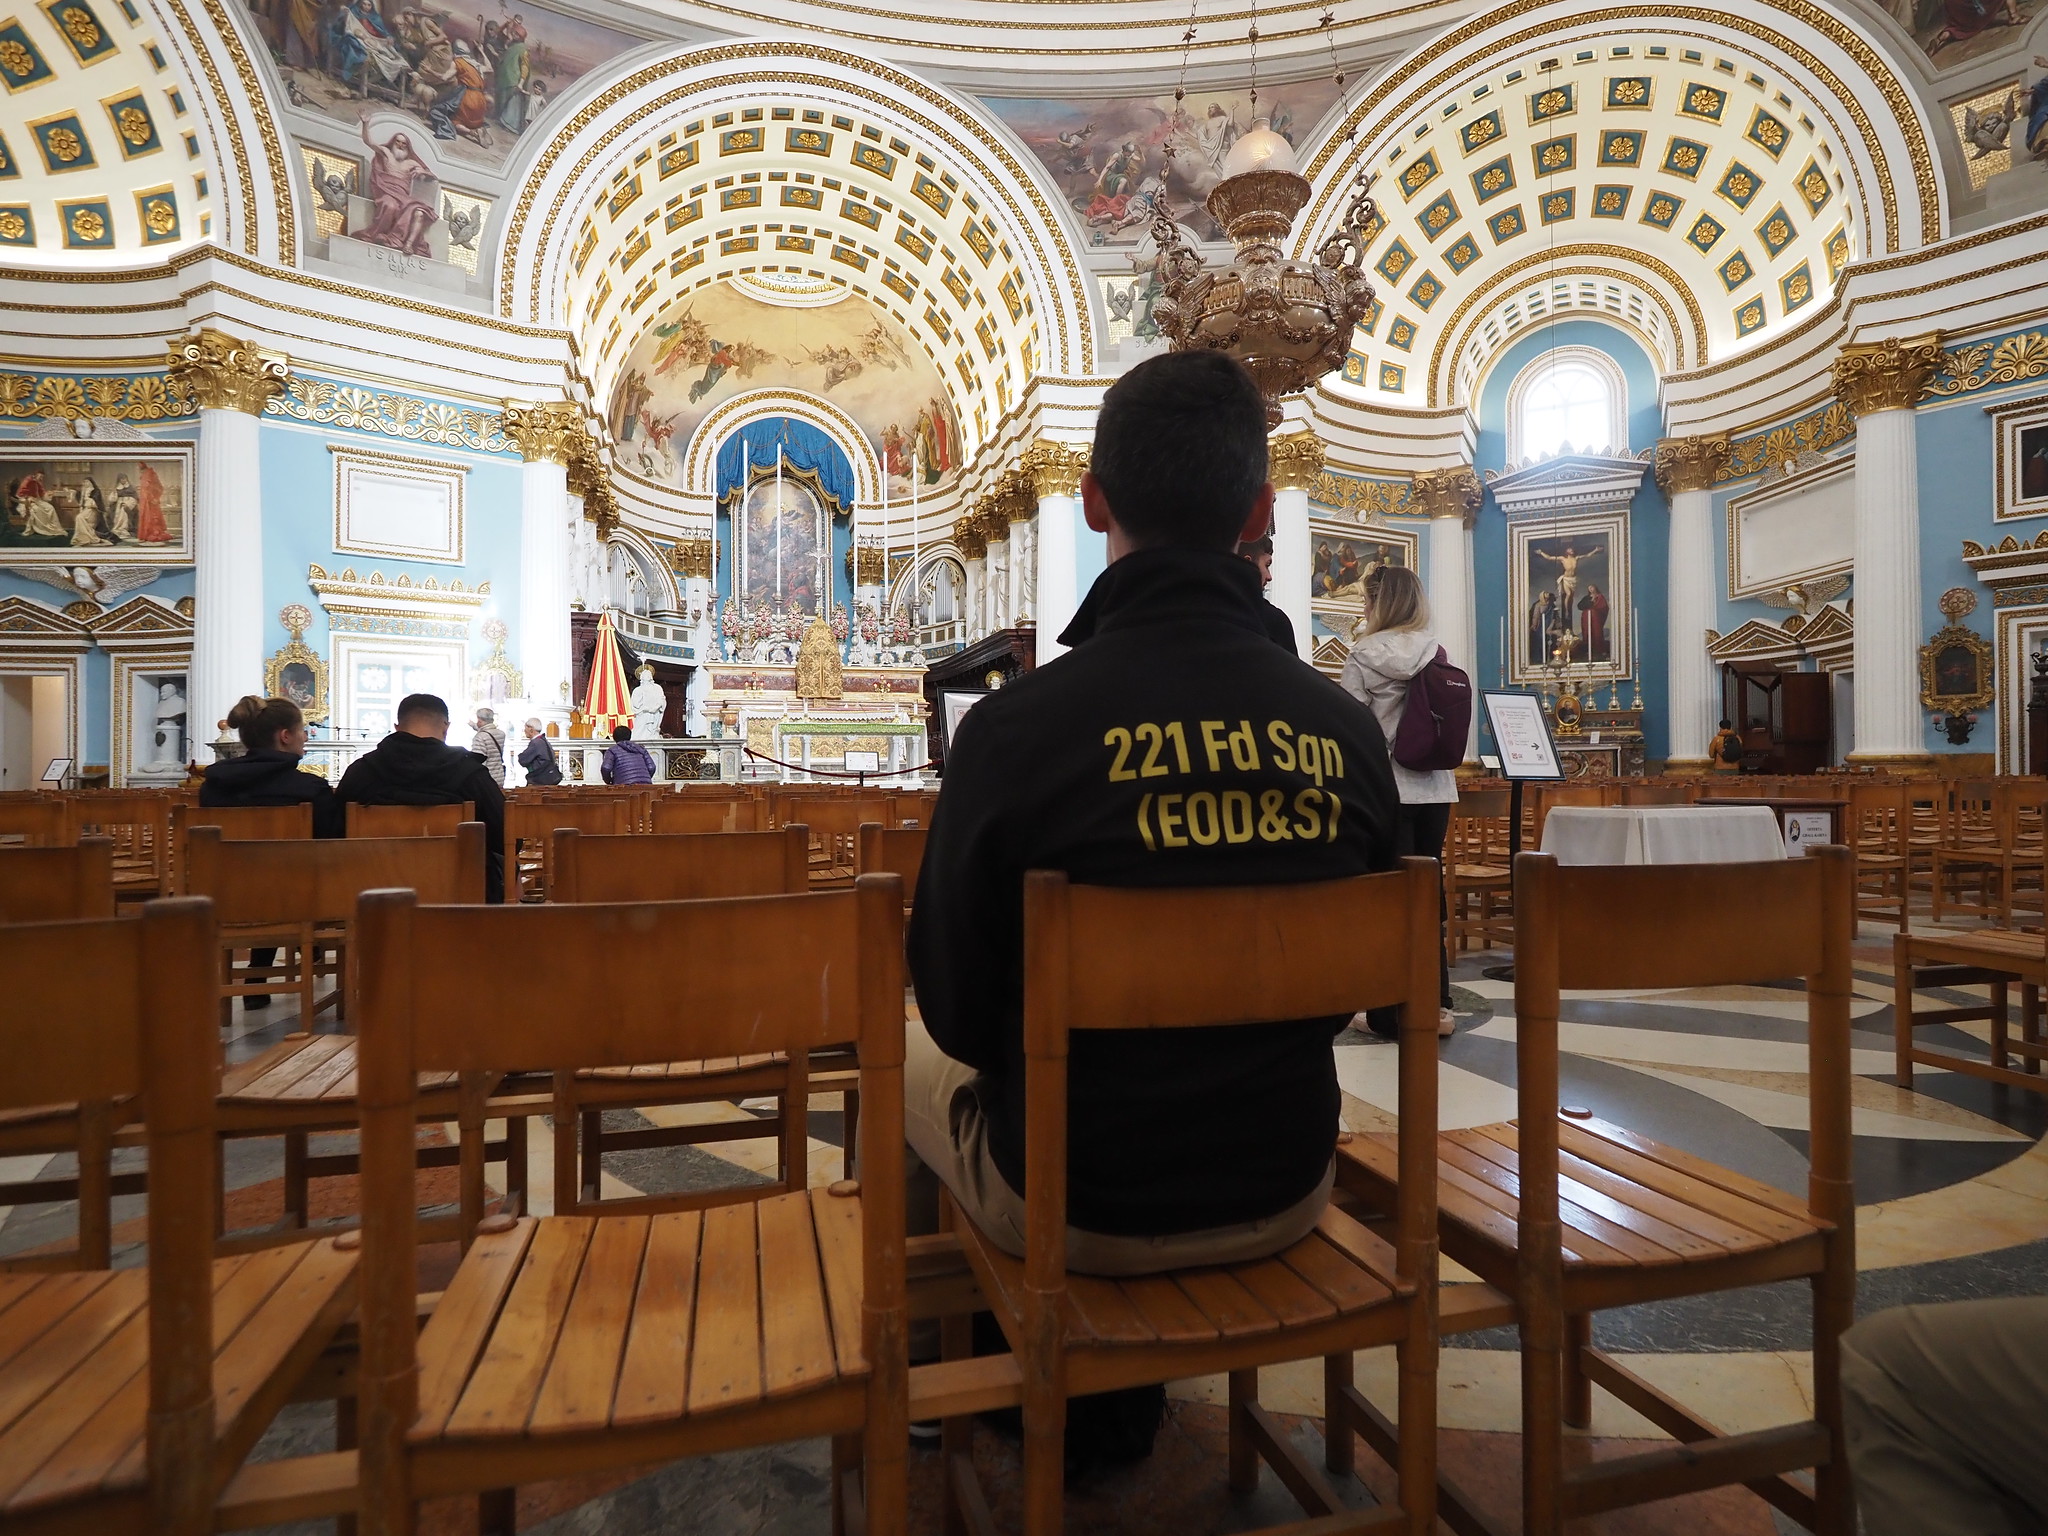 A member of the group in St Paul, Malta's rotunda